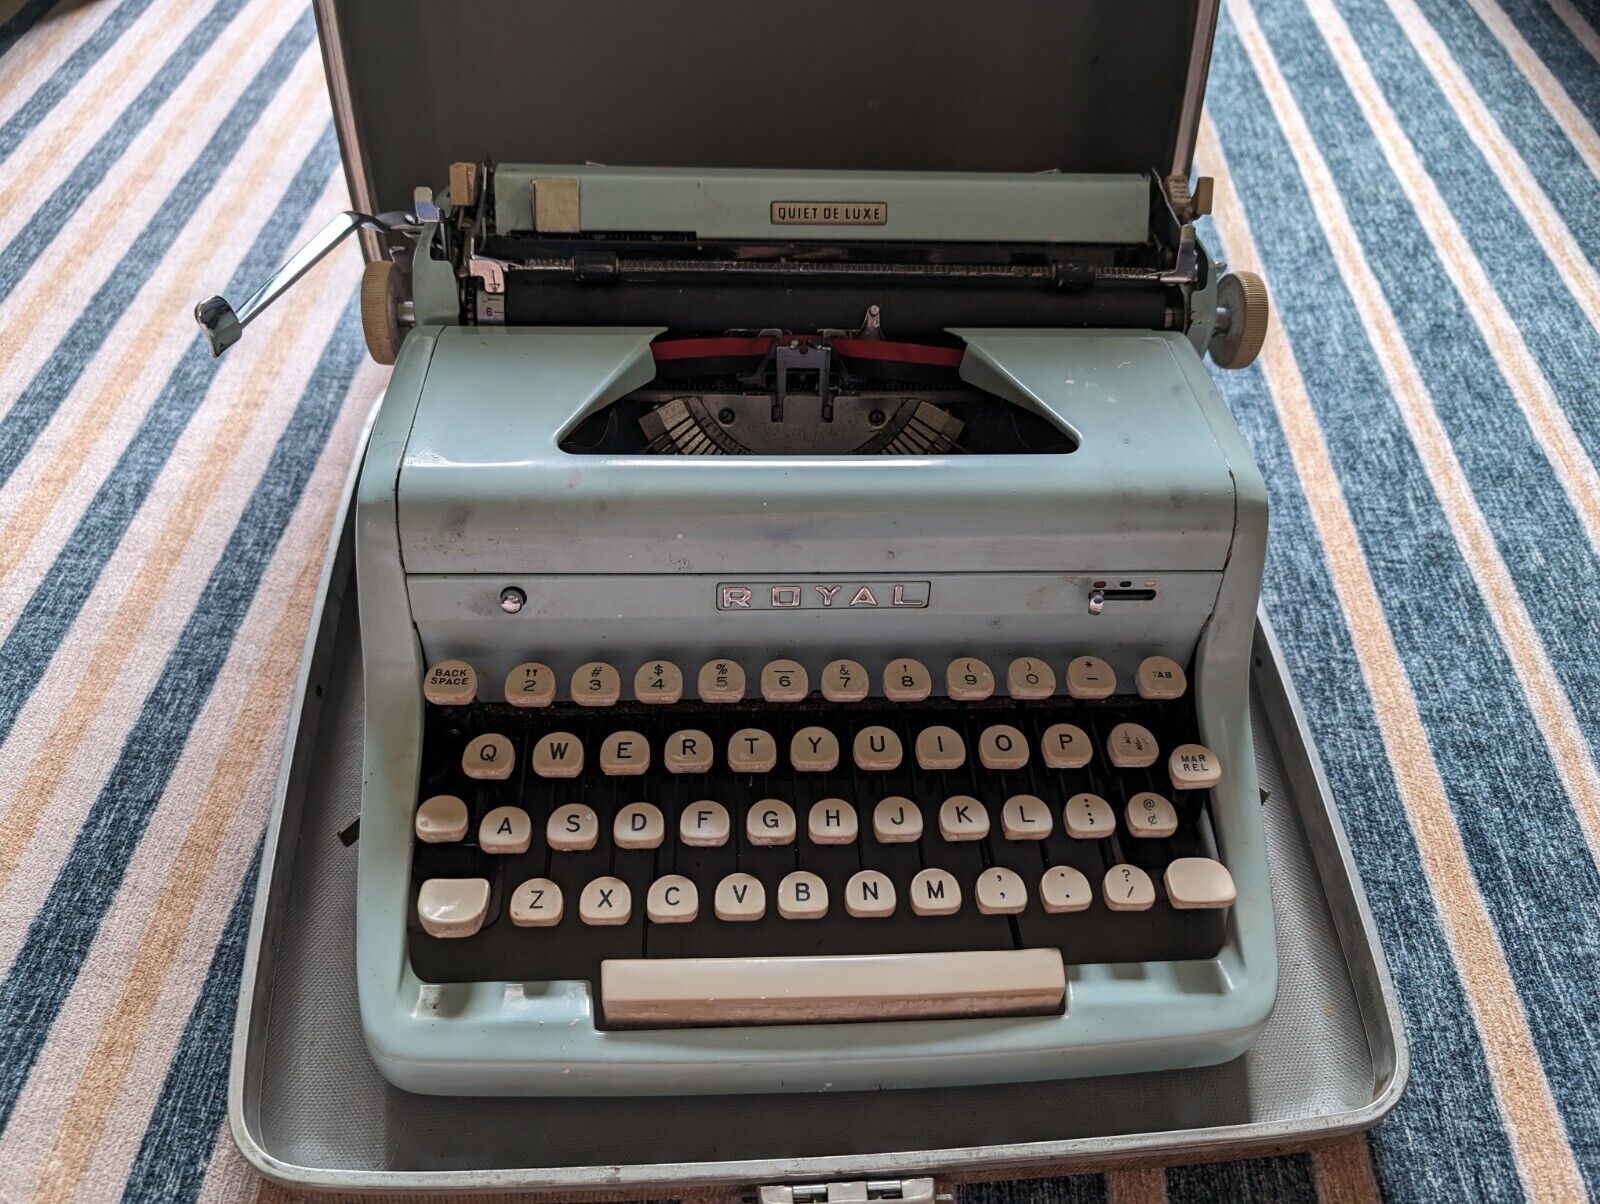 Royal Quiet De luxe Typewriter AQUA TEAL BLUE with Original Tweed Case vintage